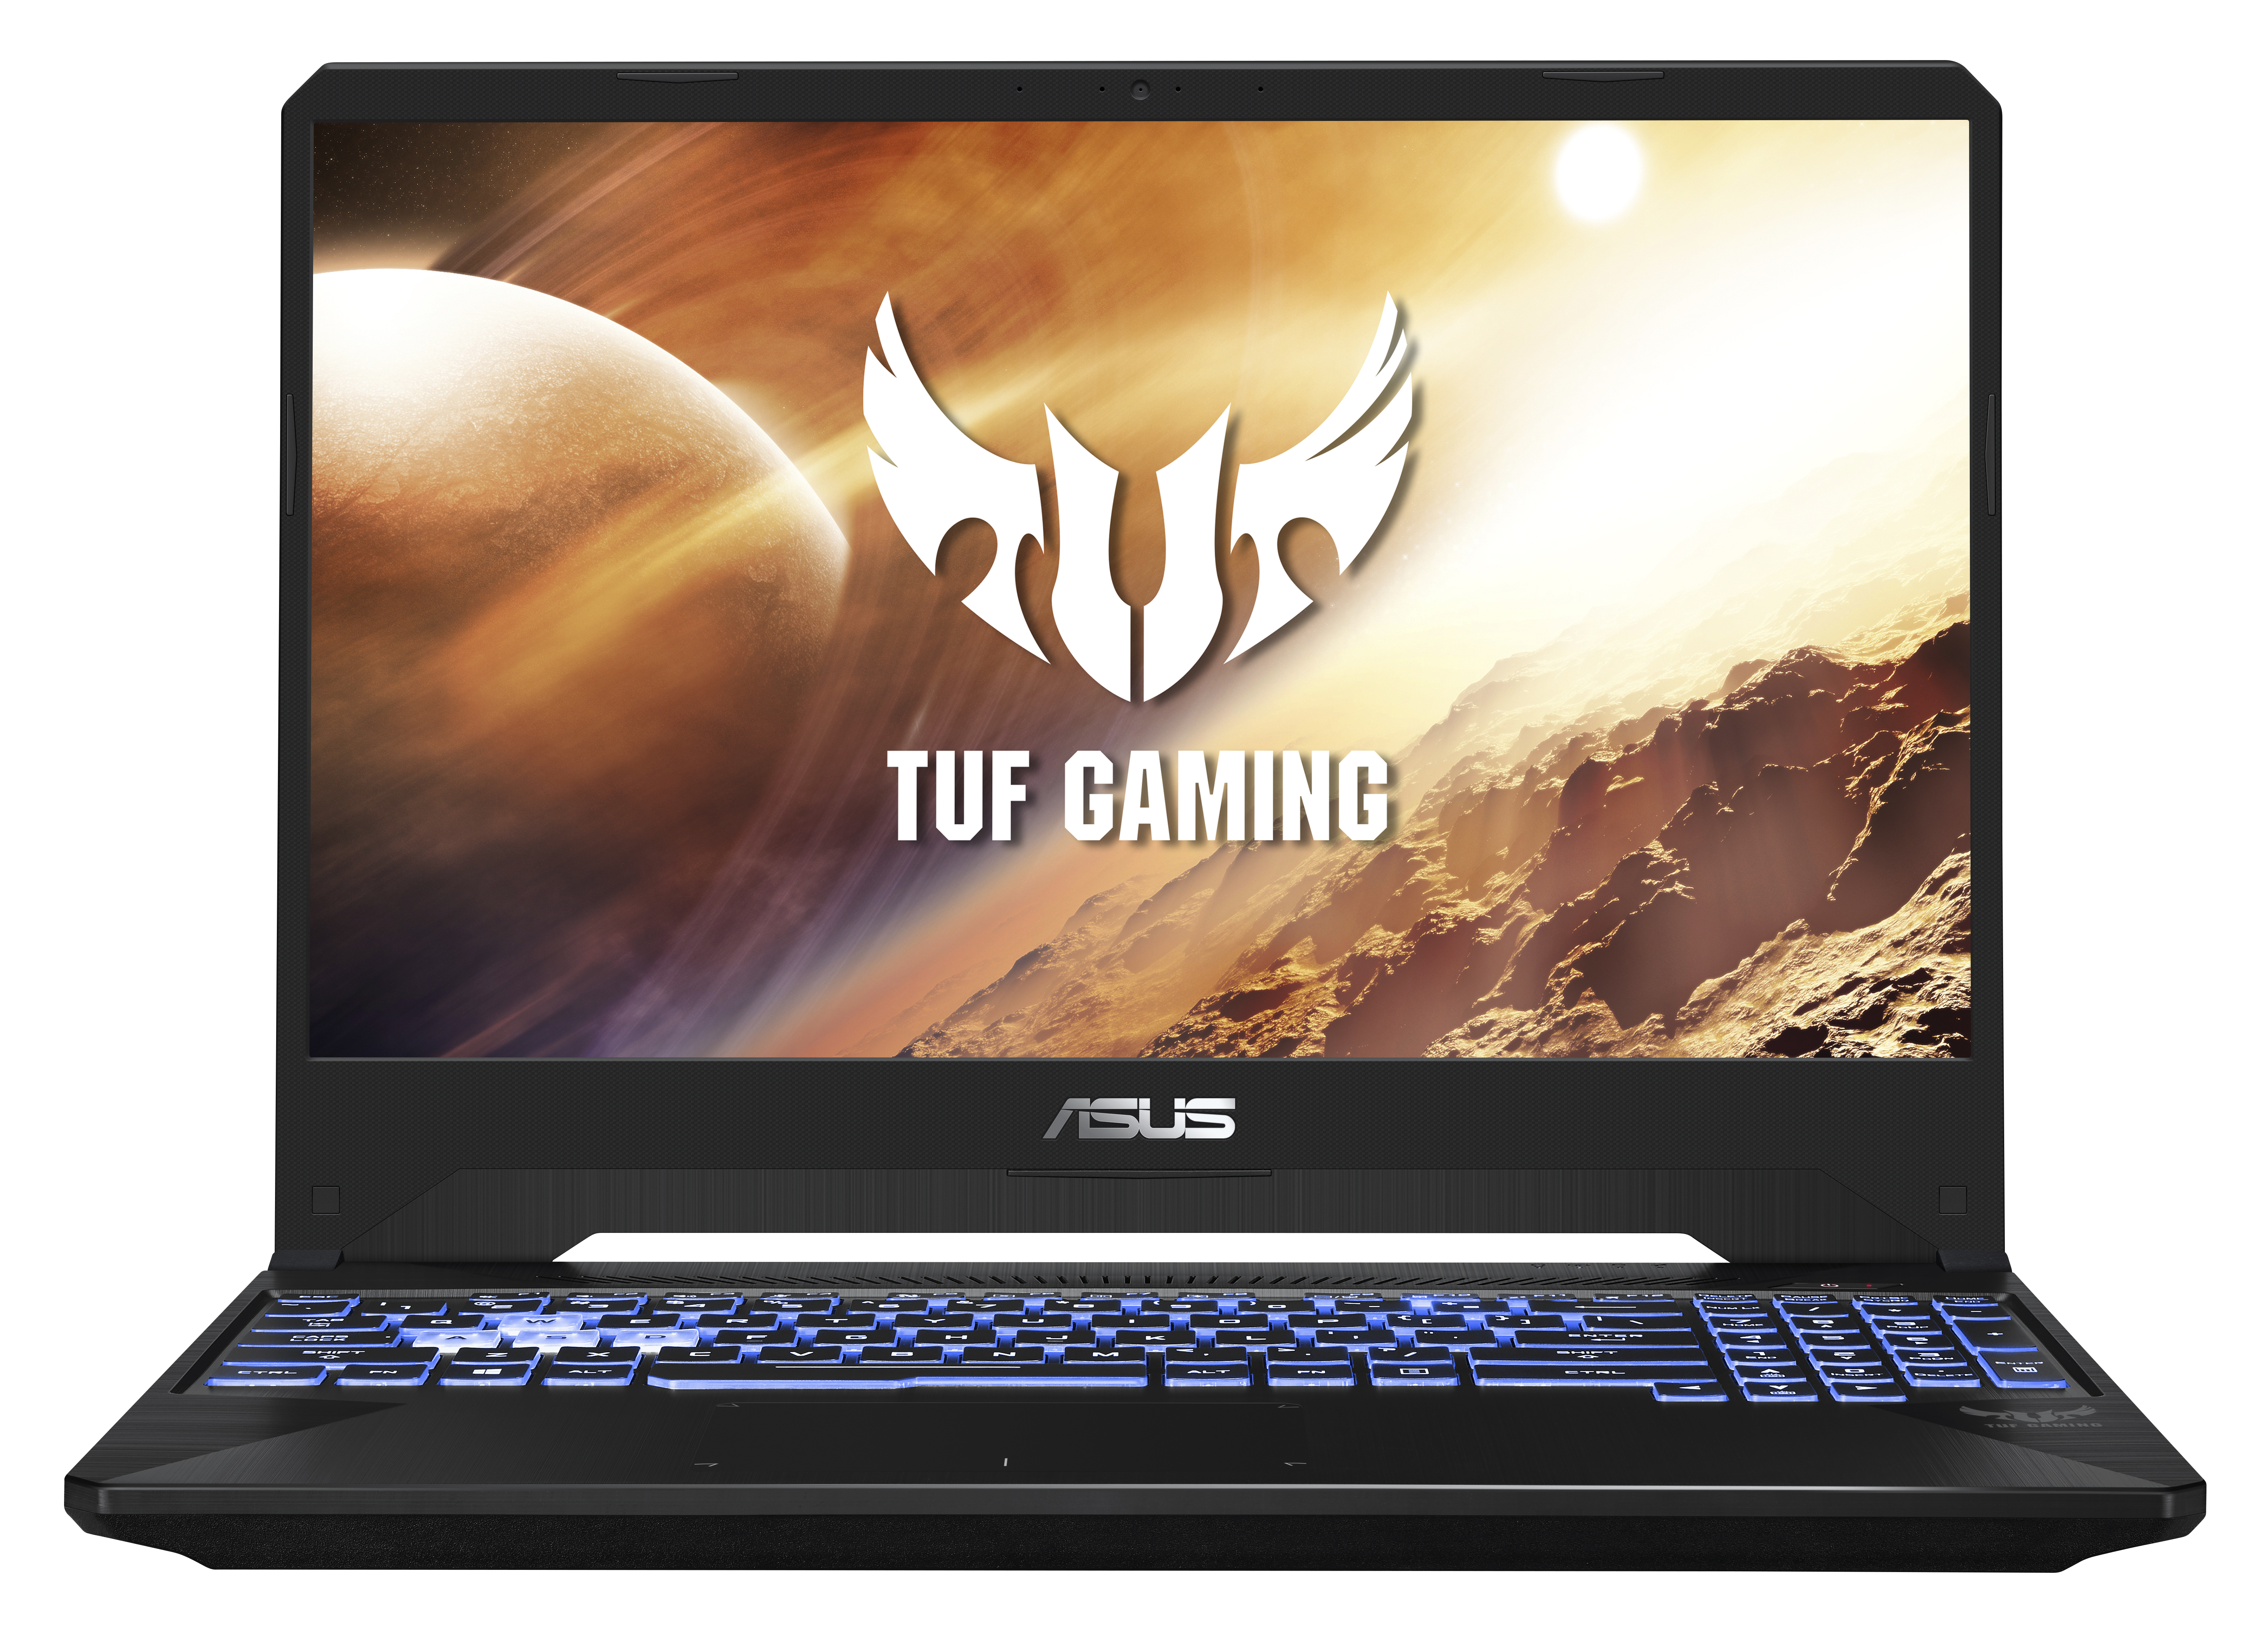 ASUS TUF Gaming 15.6" FHD, AMD Ryzen 7 3750H, NVIDIA GeForce RTX 2060 Graphics, 8GB RAM, 512GB SSD, Stealth Black, FX505DV-WB74 - image 1 of 2